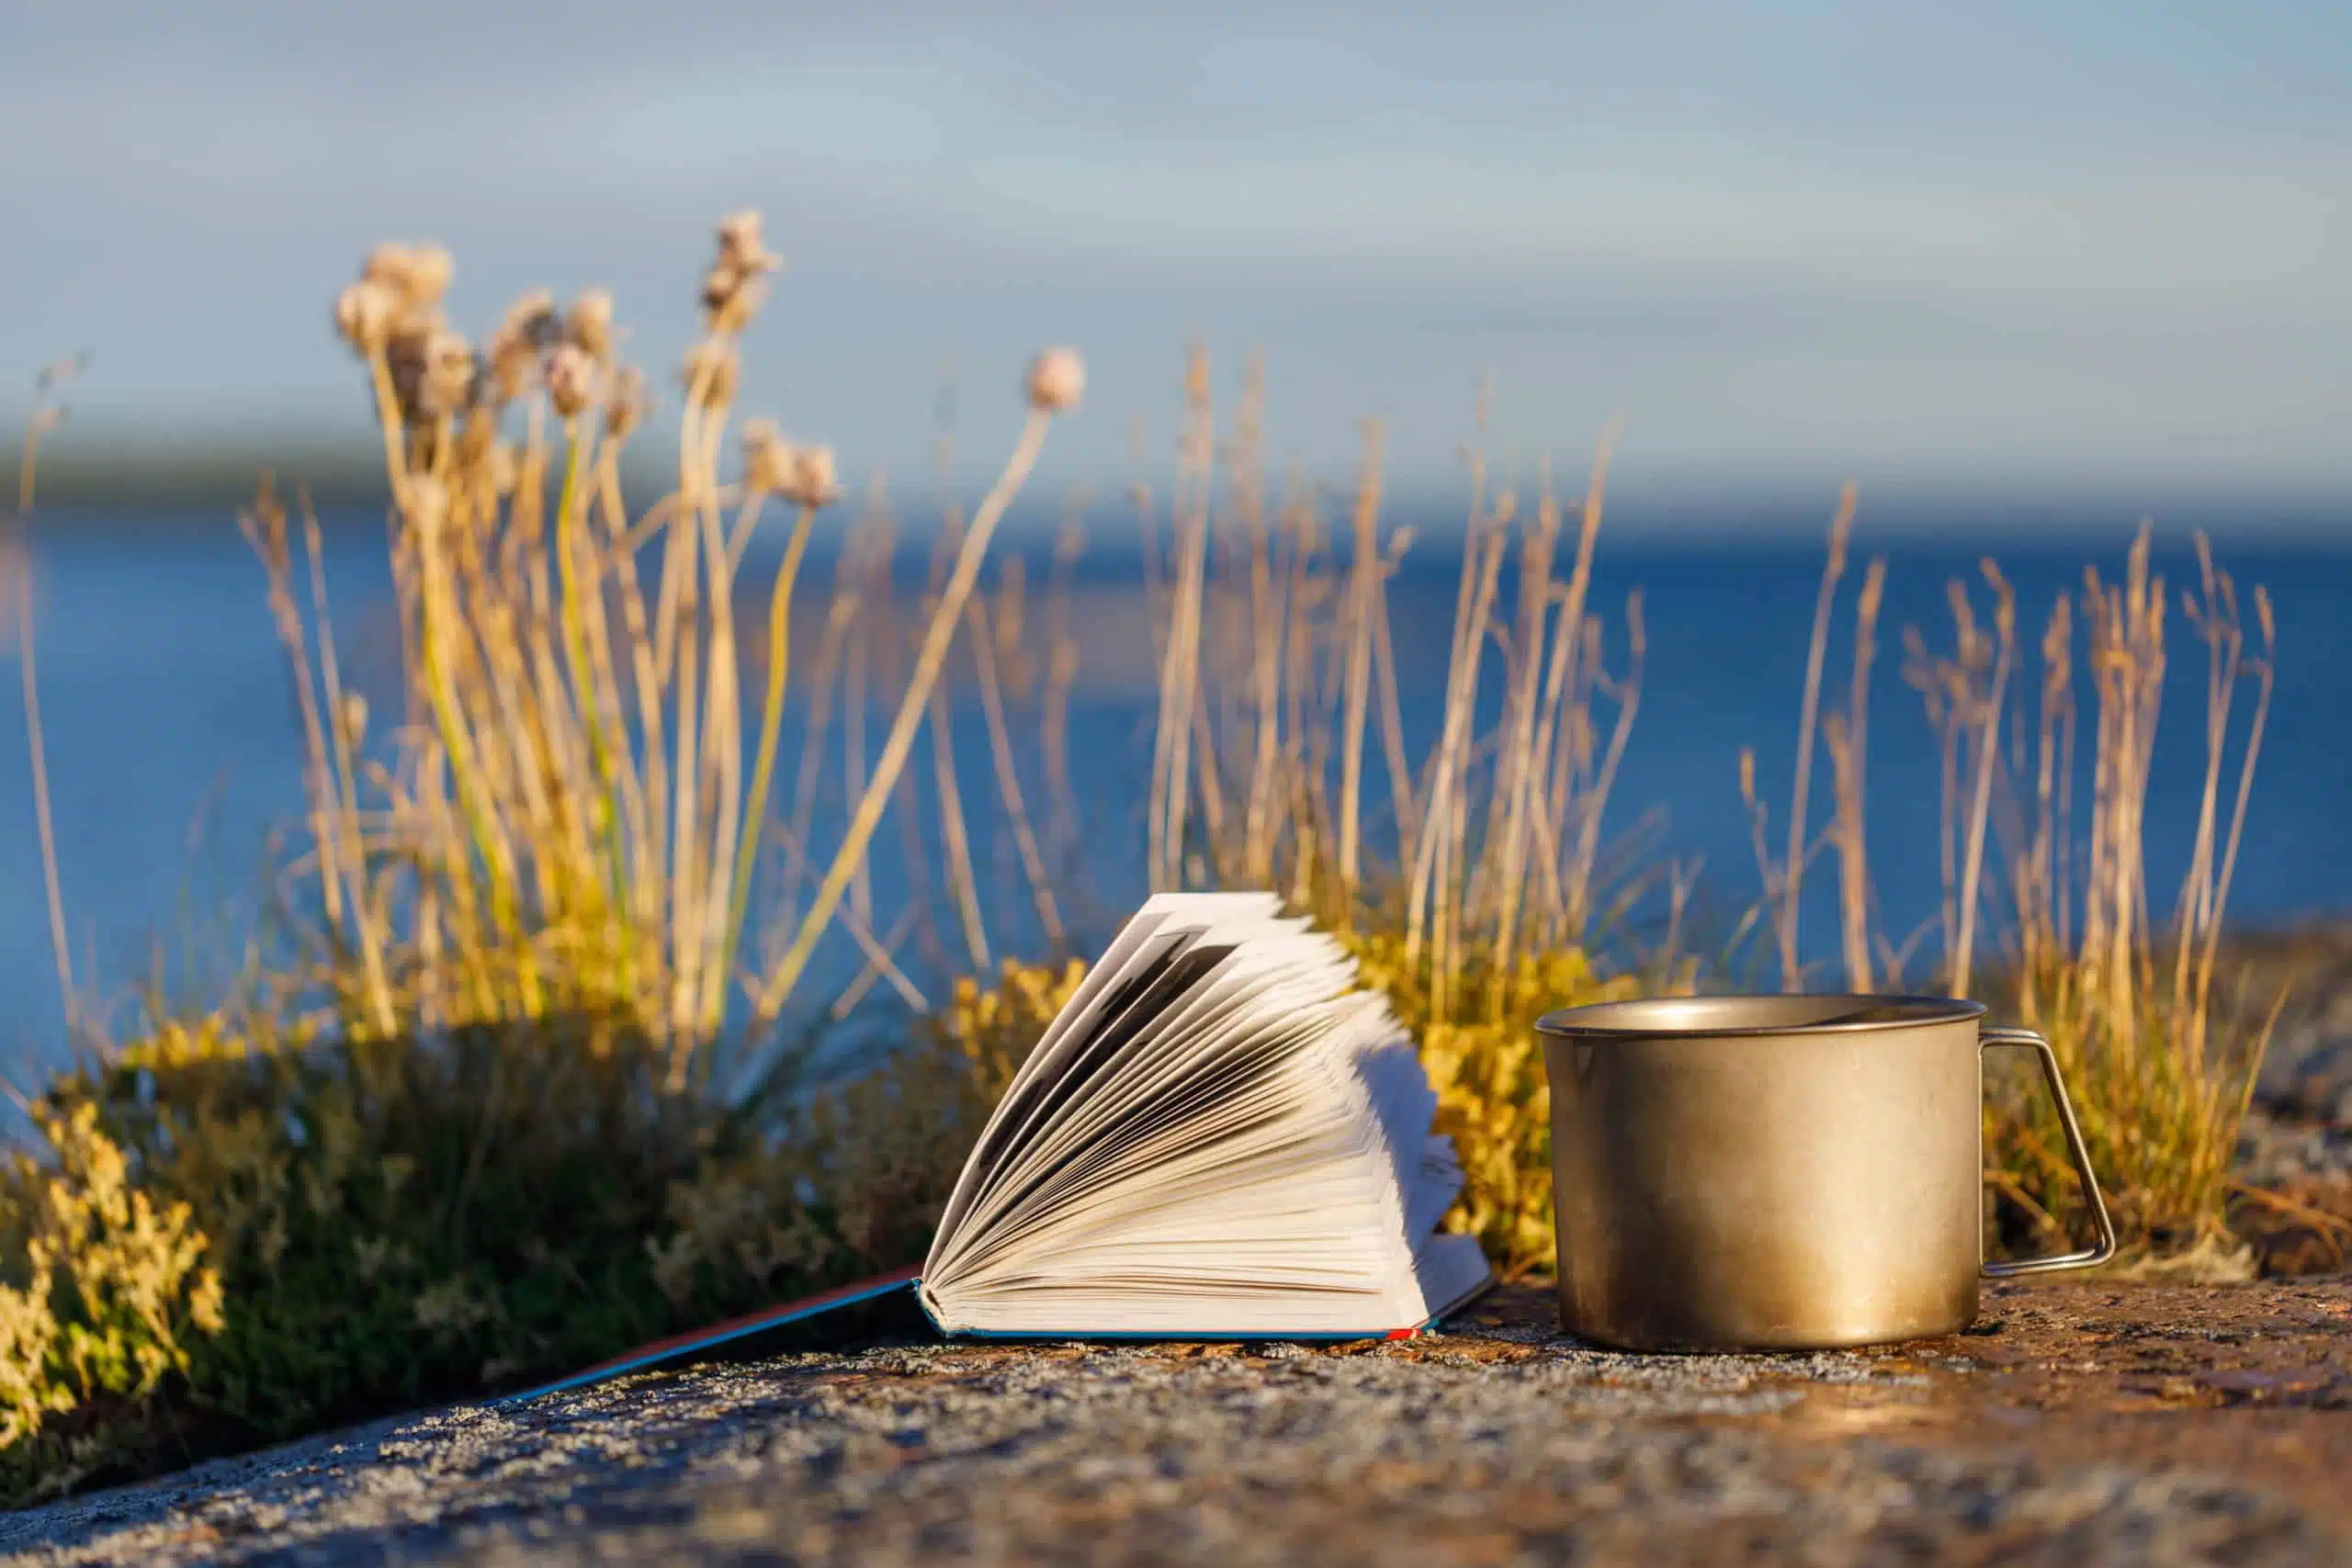 Book with a mug of tea outdoor.